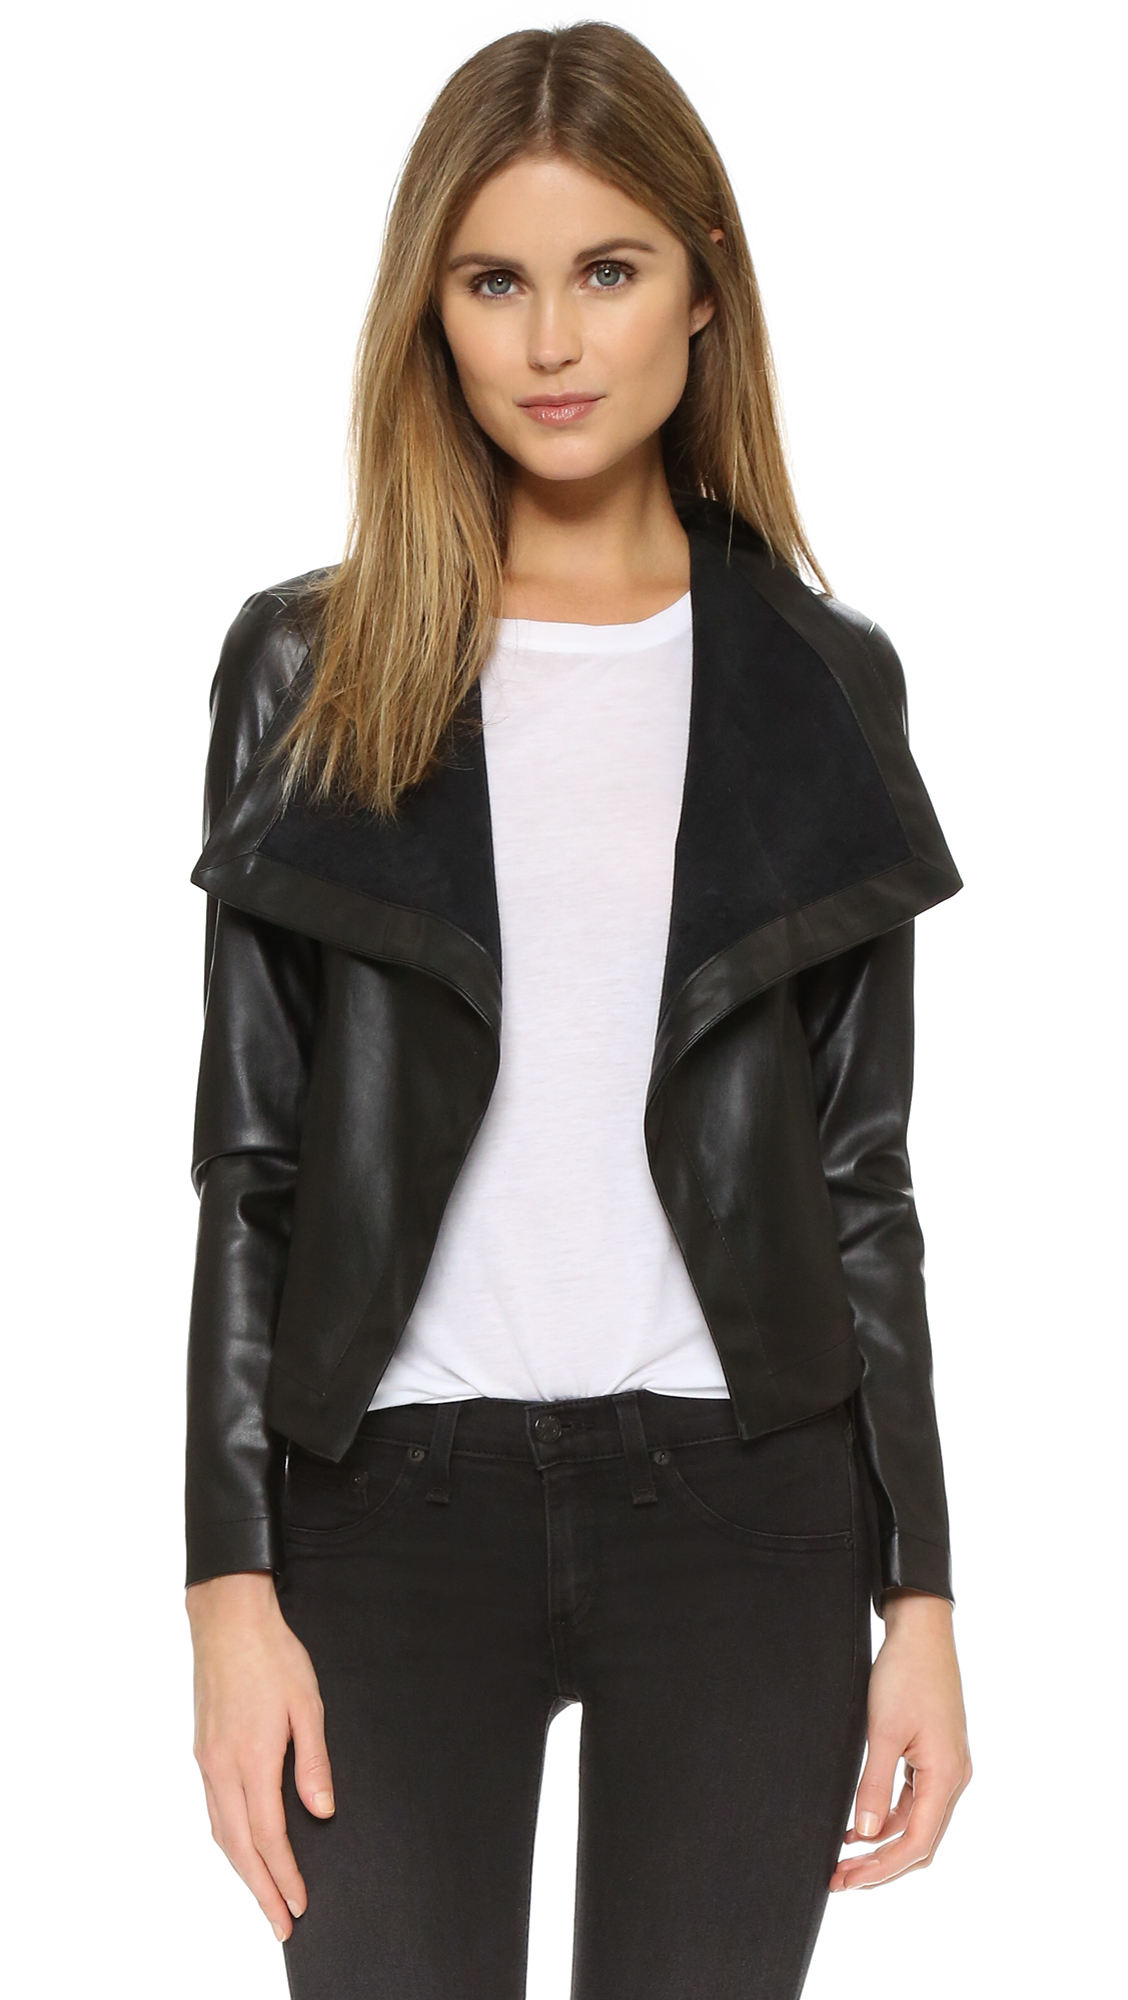 BB Dakota Ariana Drape Front Jacket in Black